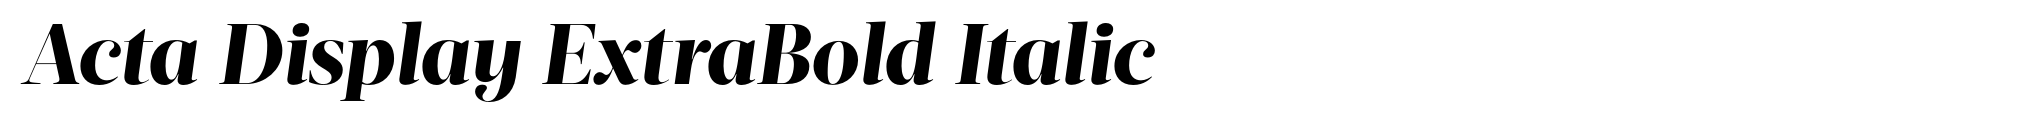 Acta Display ExtraBold Italic image